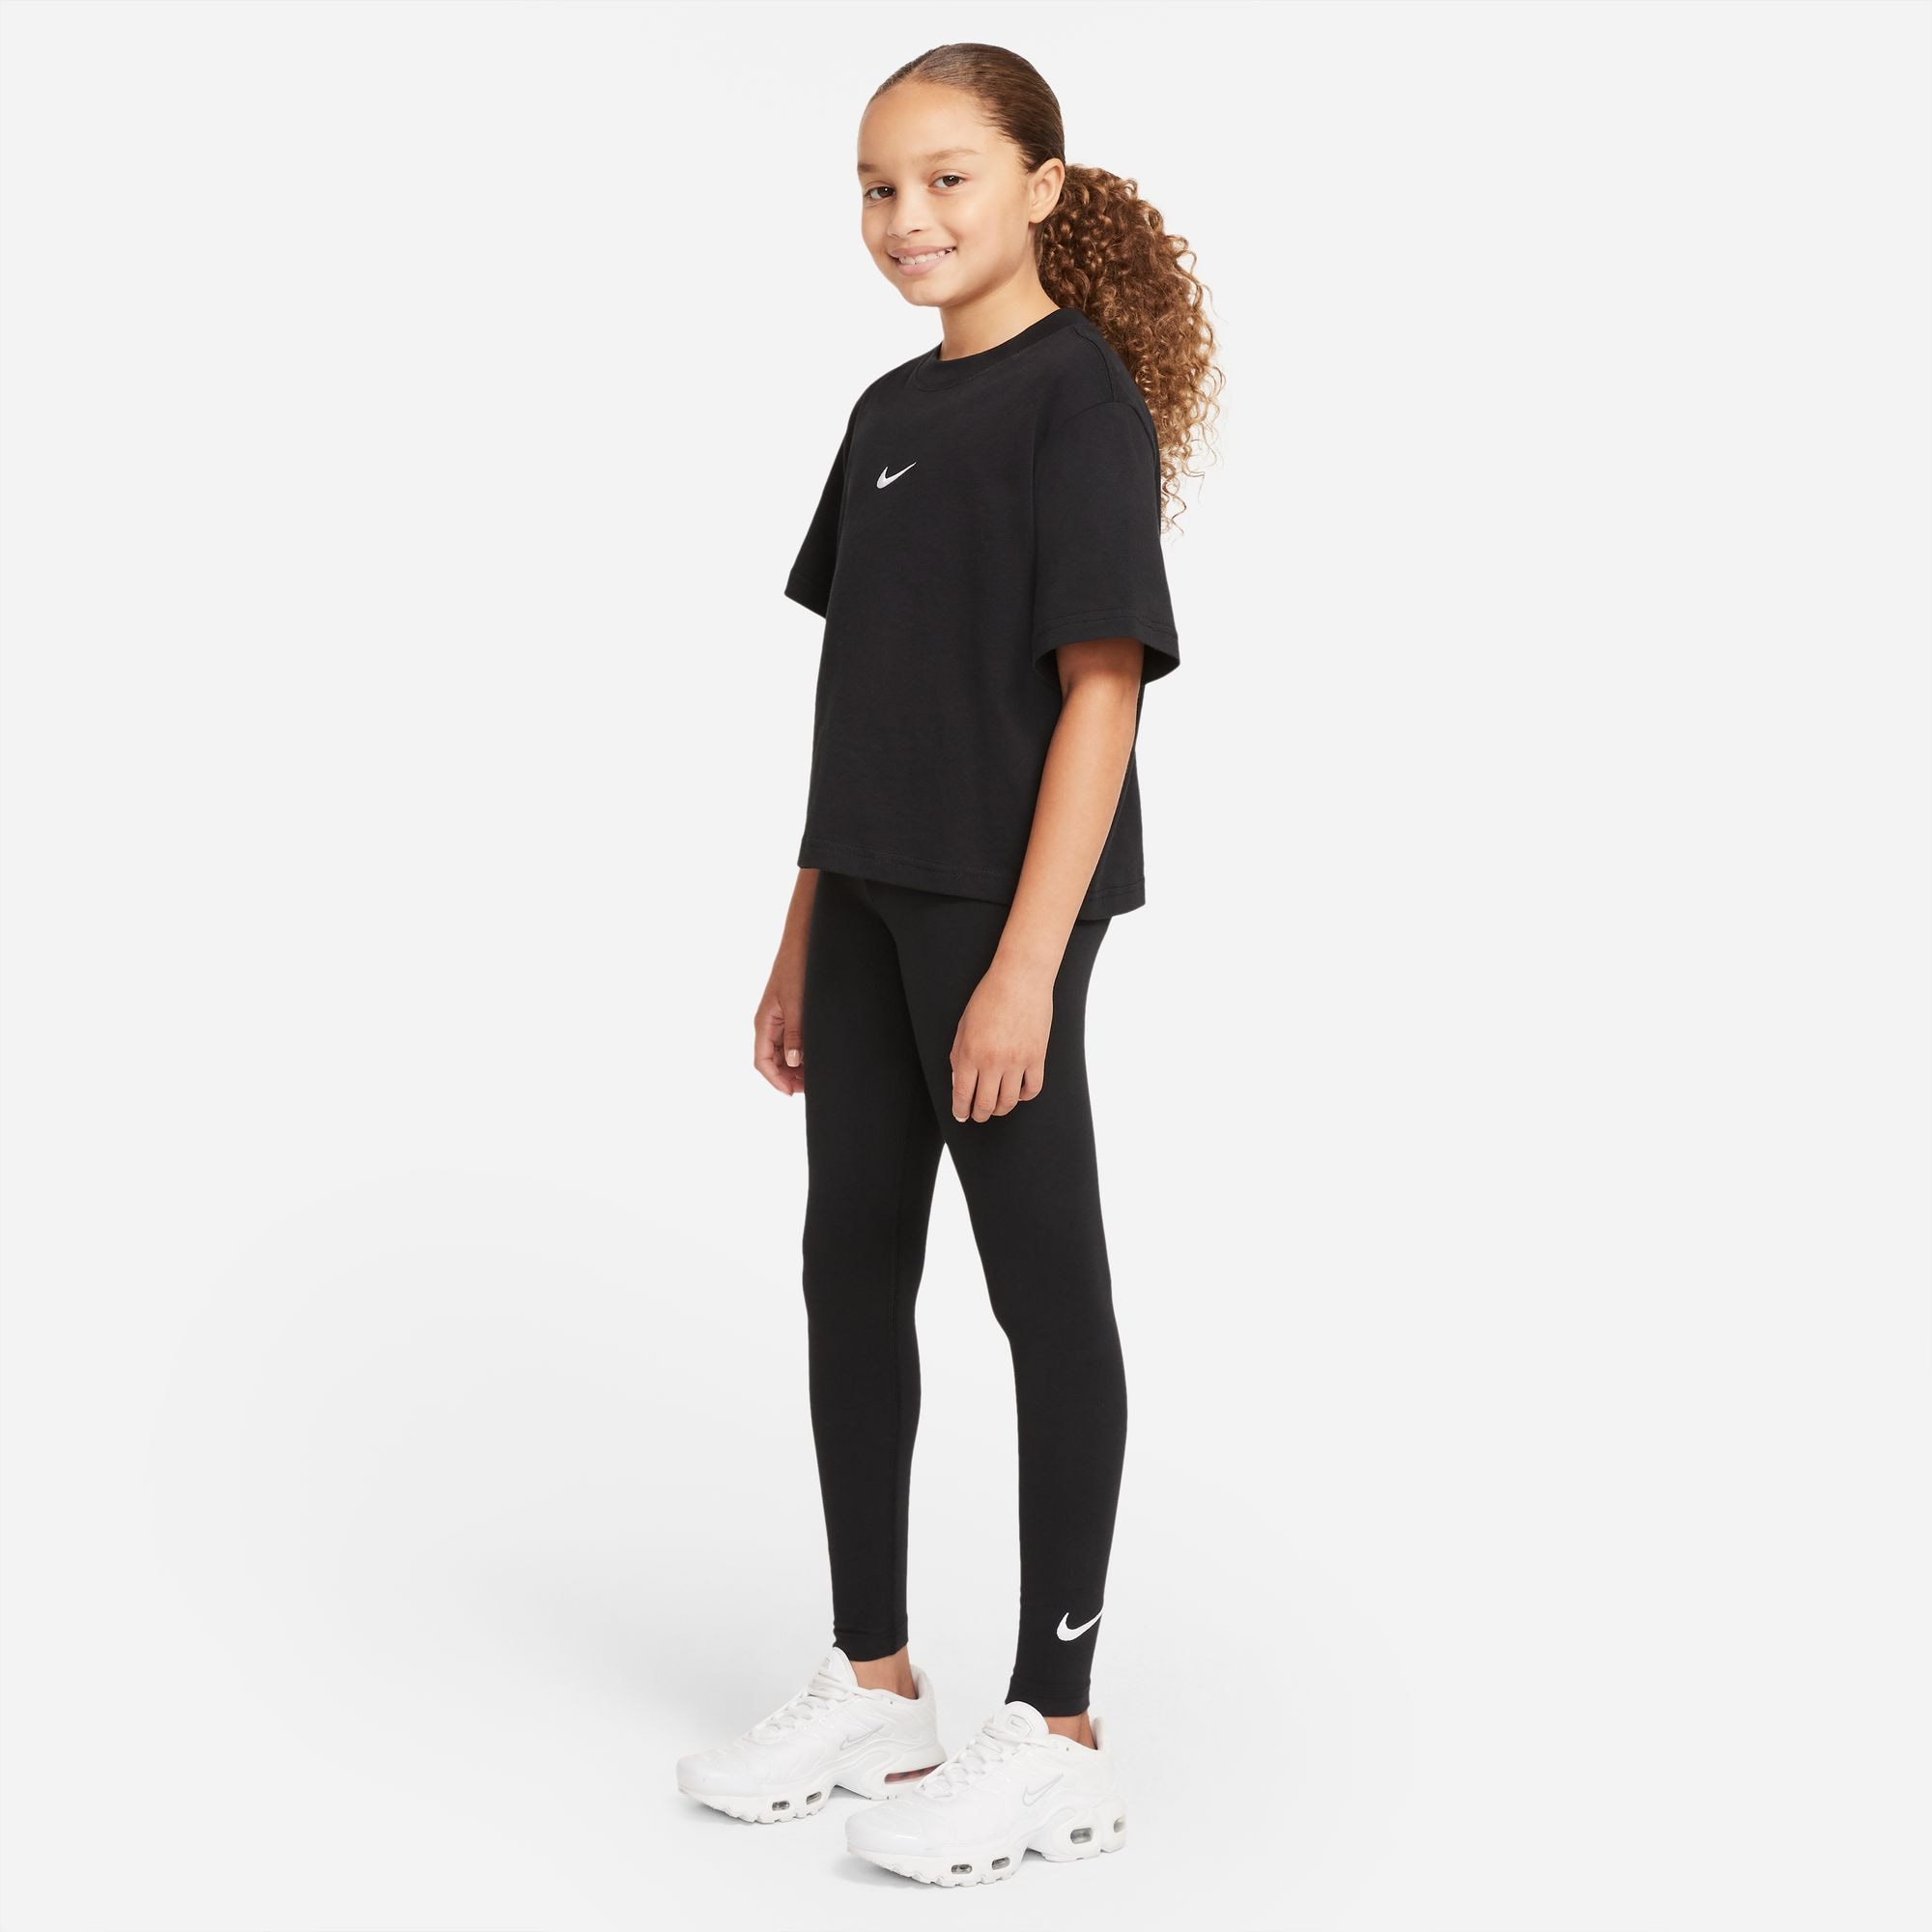 Nike Sportswear Leggings LEGGINGS OTTO bei BIG KIDS\' »FAVORITES Kinder« SWOOSH kaufen (GIRLS\') für 